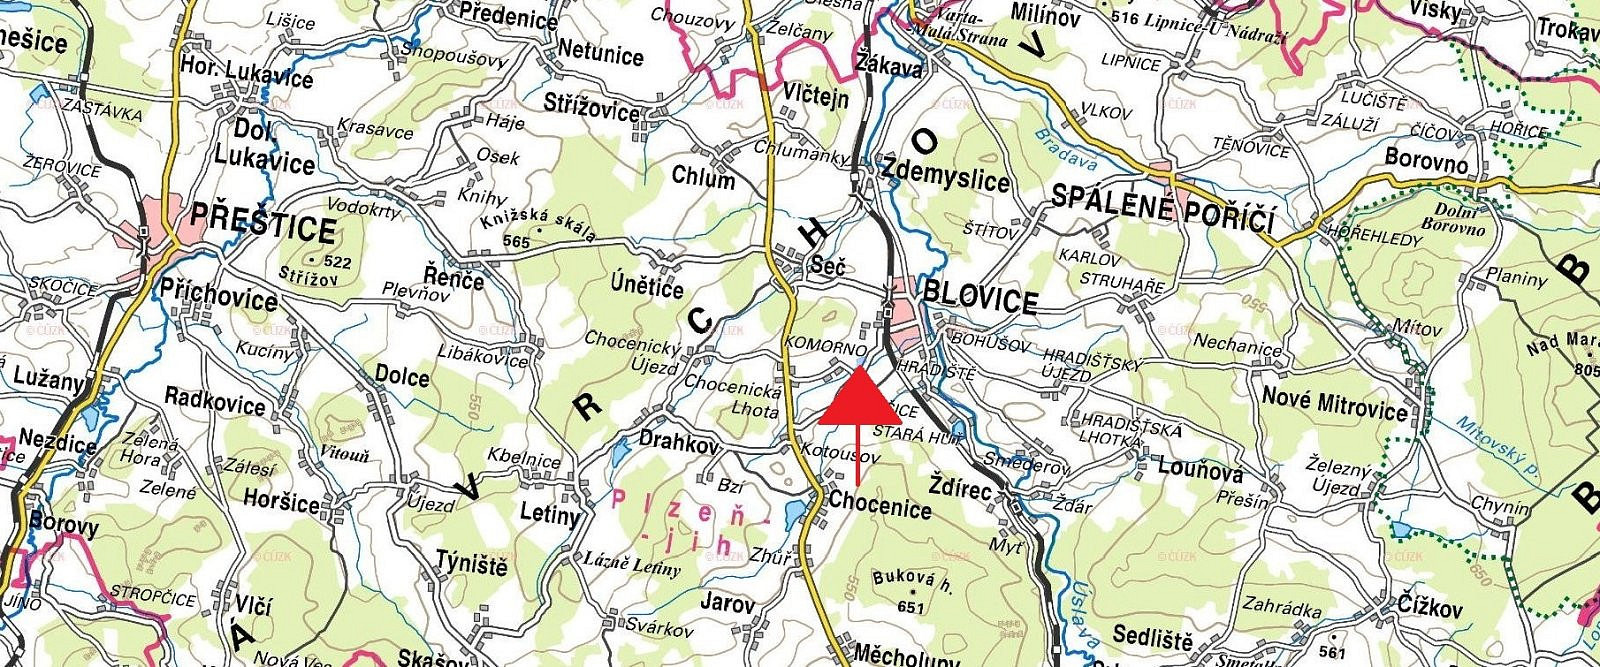 Blovice - Komorno, okres Plzeň-Jih